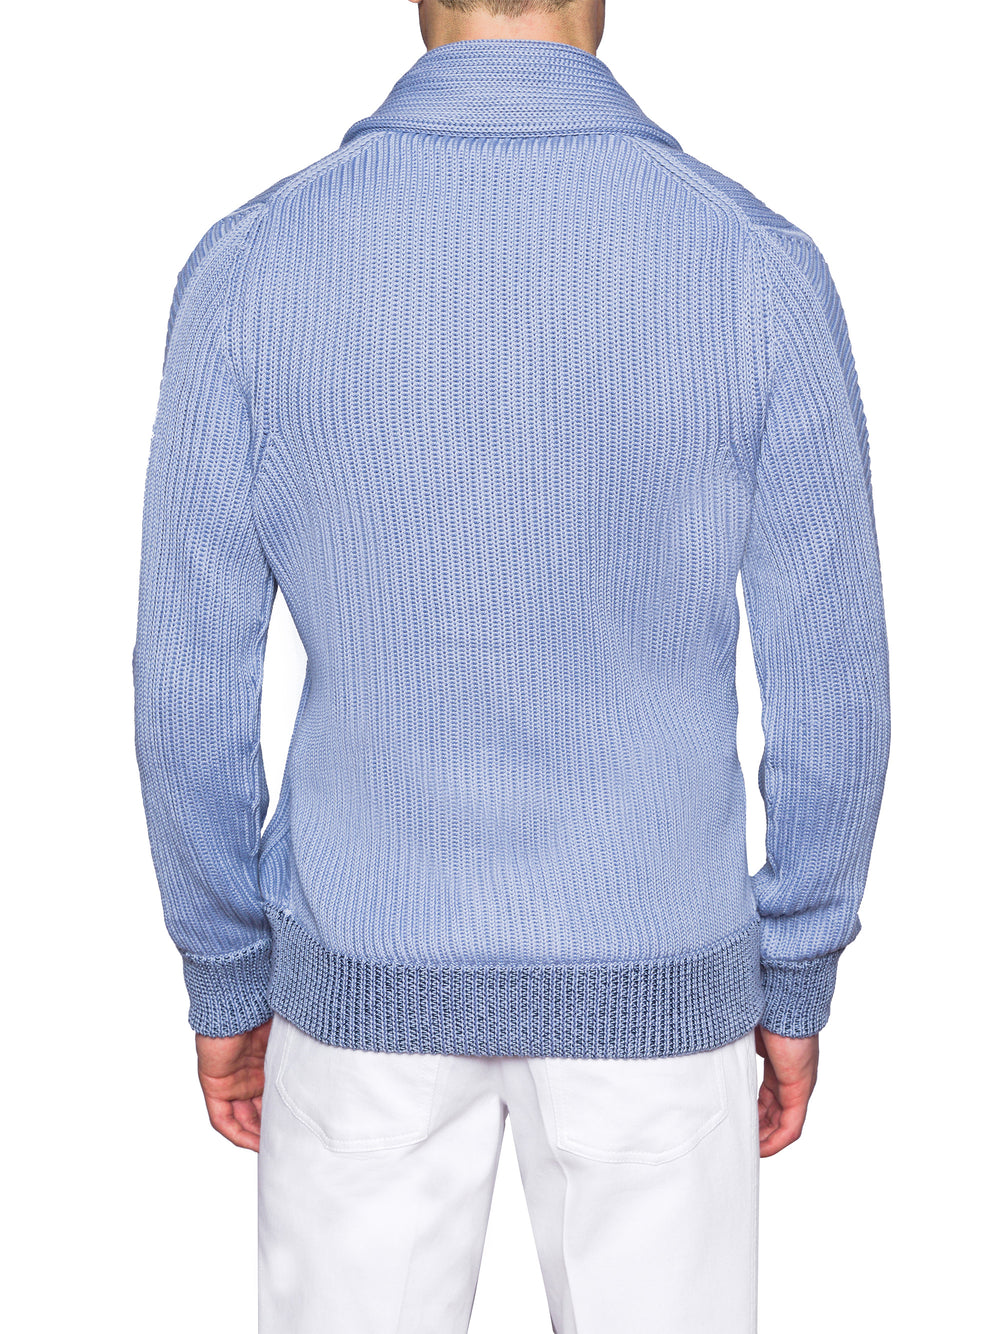 Men's Light Blue Sea Island Cotton Formal Shirt